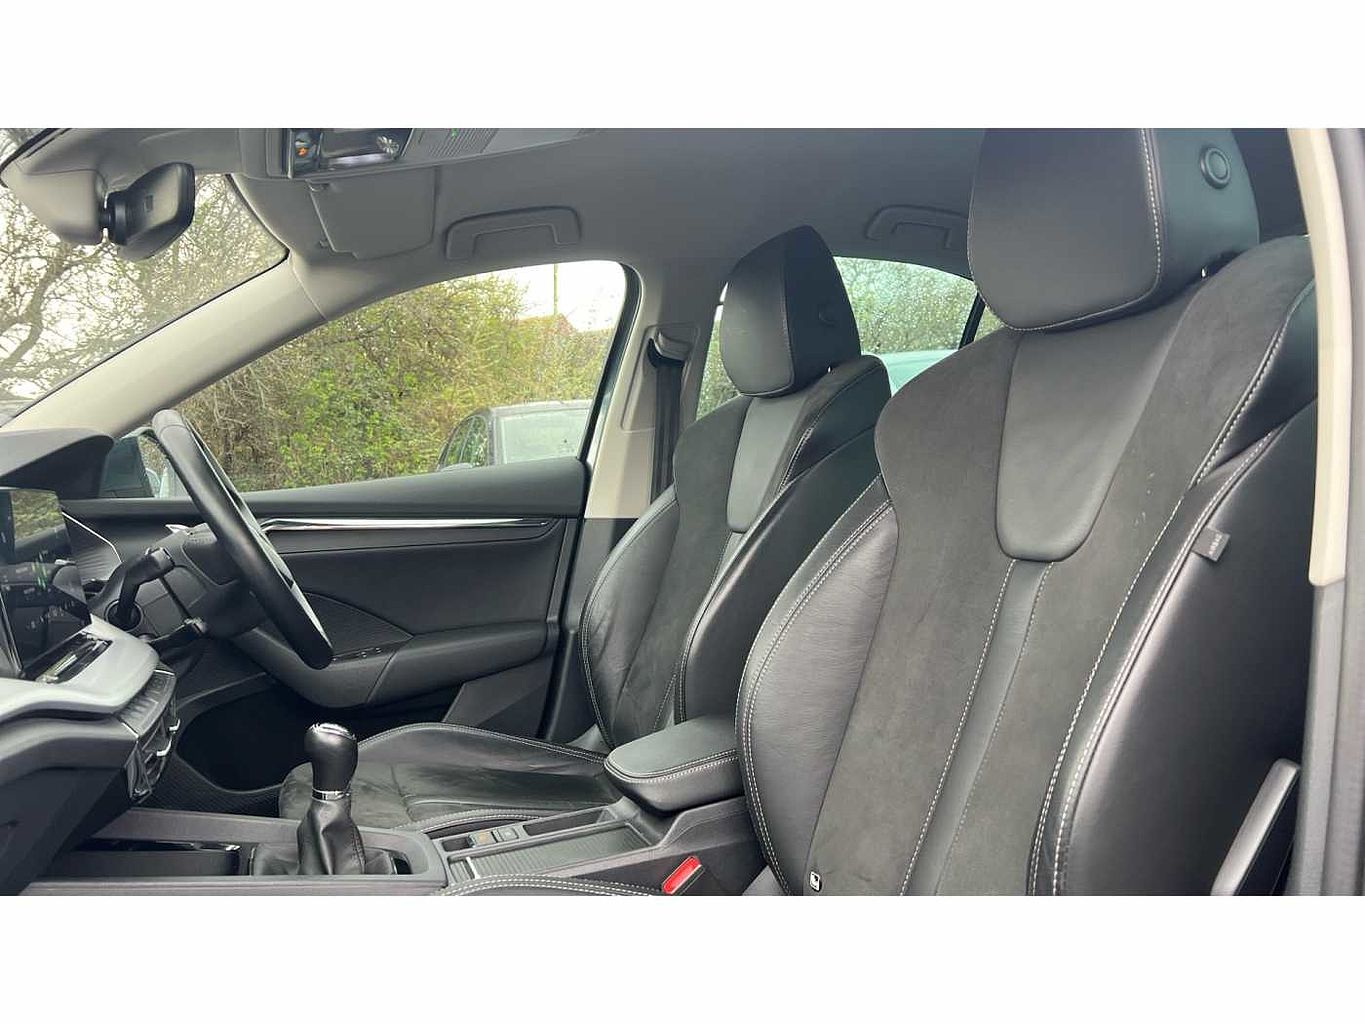 SKODA Octavia Hatchback (2017) 1.5 TSI ACT SE L (150PS)